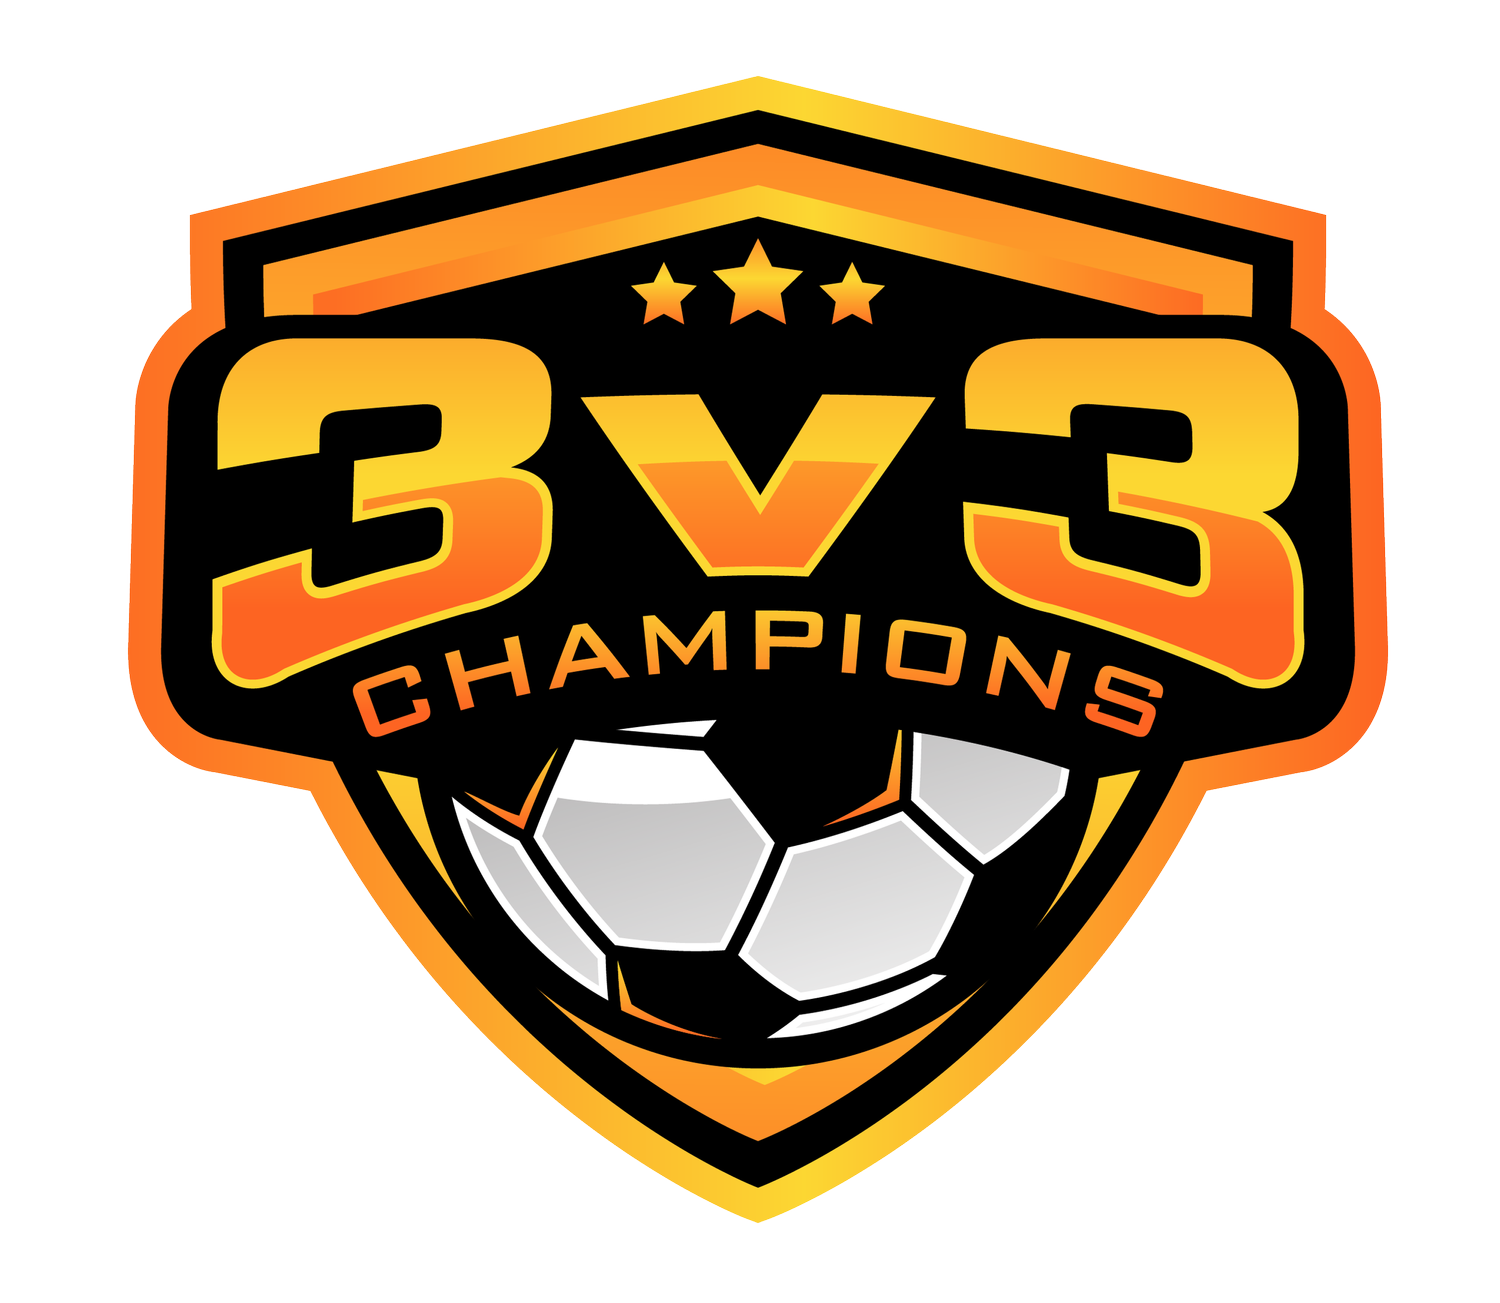 3v3 CHAMPIONS